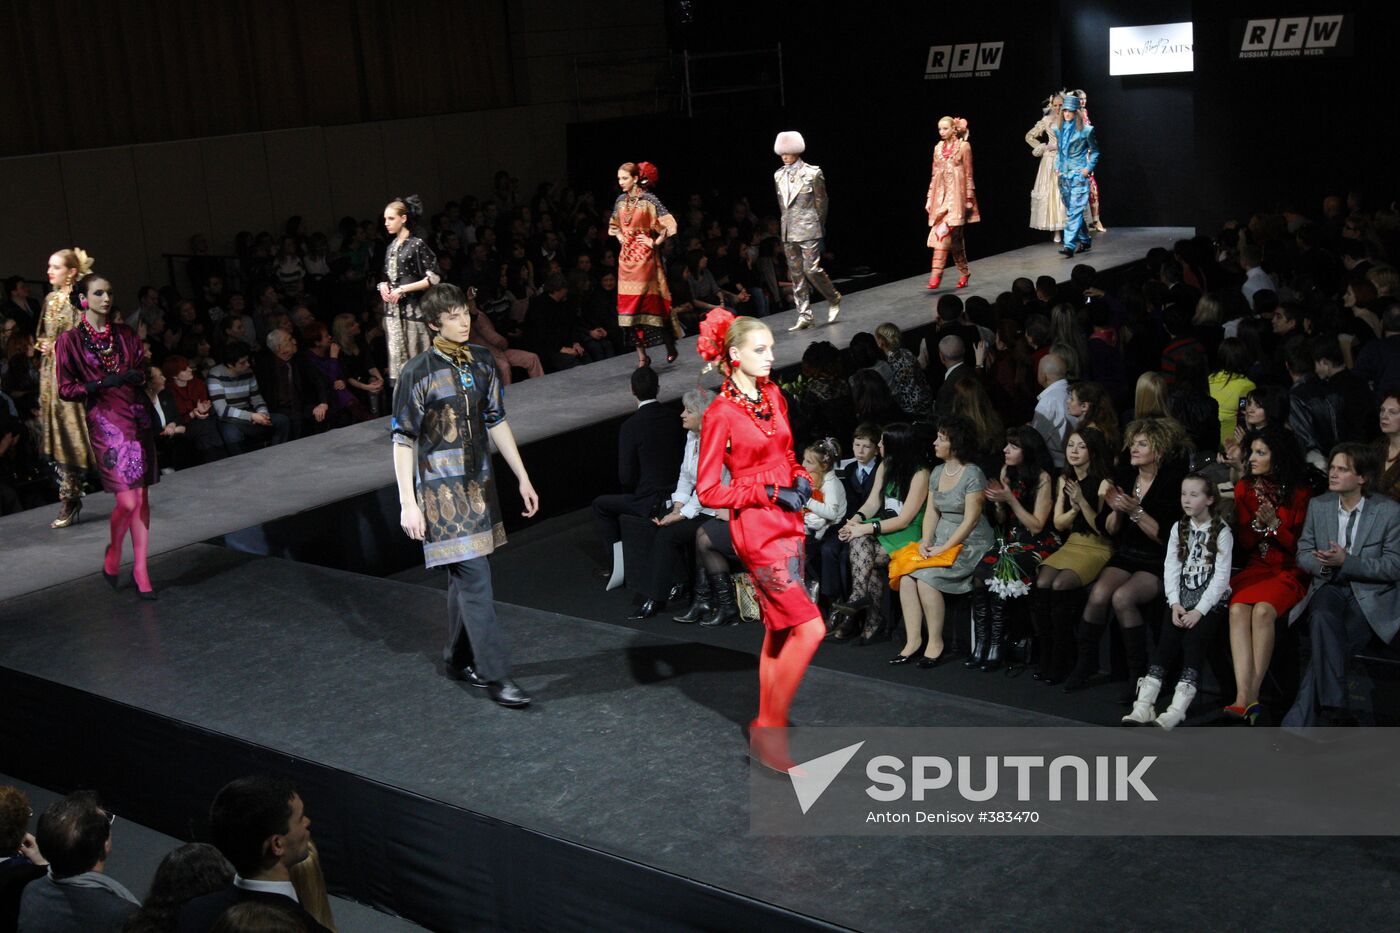 Fashion designer Vyacheslav Zaitsev presents his new collection